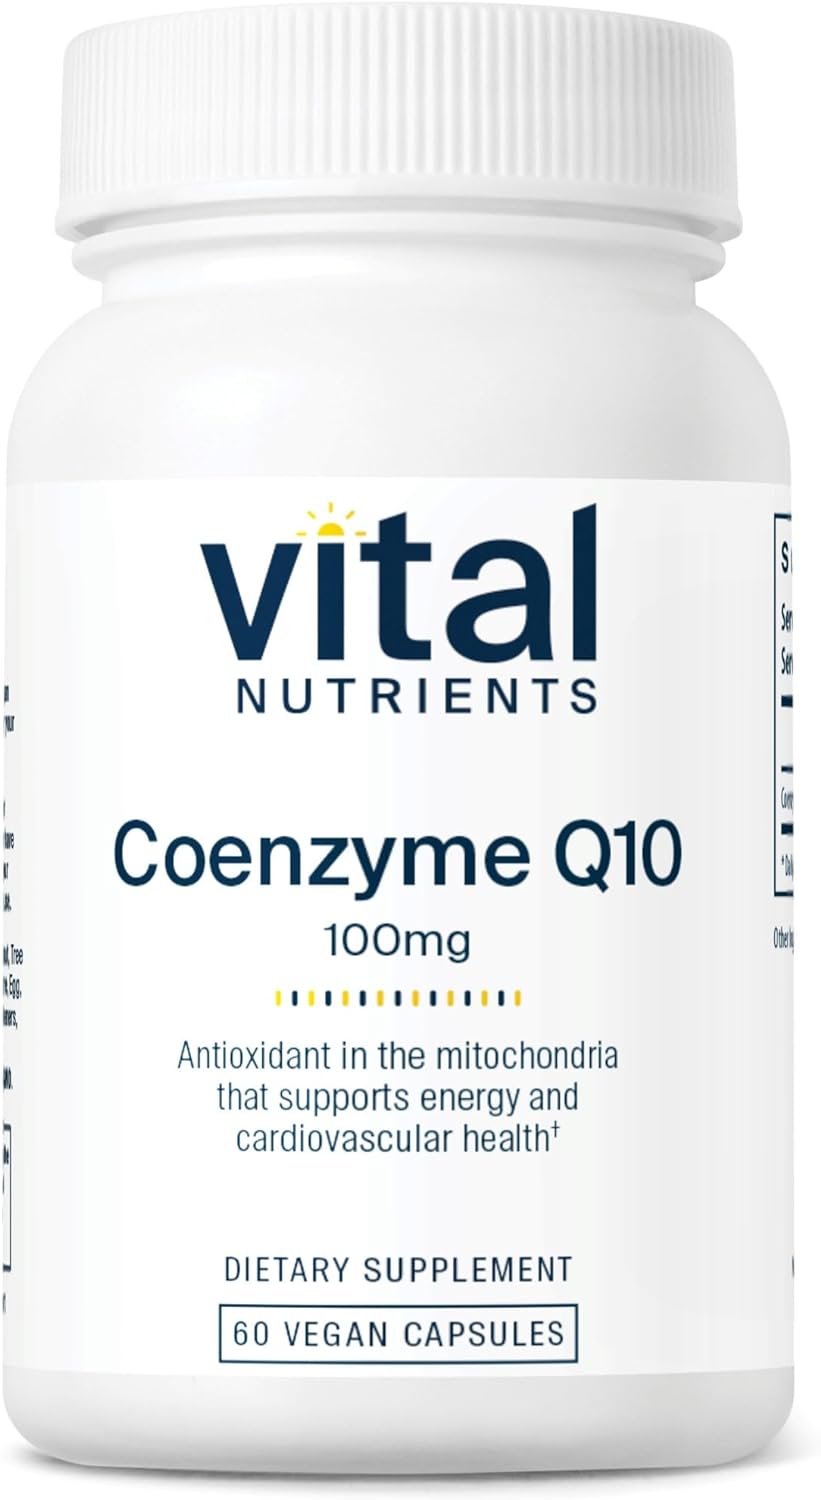 Vital Nutrients CoQ10 100mg | Vegan Supplement | CoEnzyme Q10 from Ubi